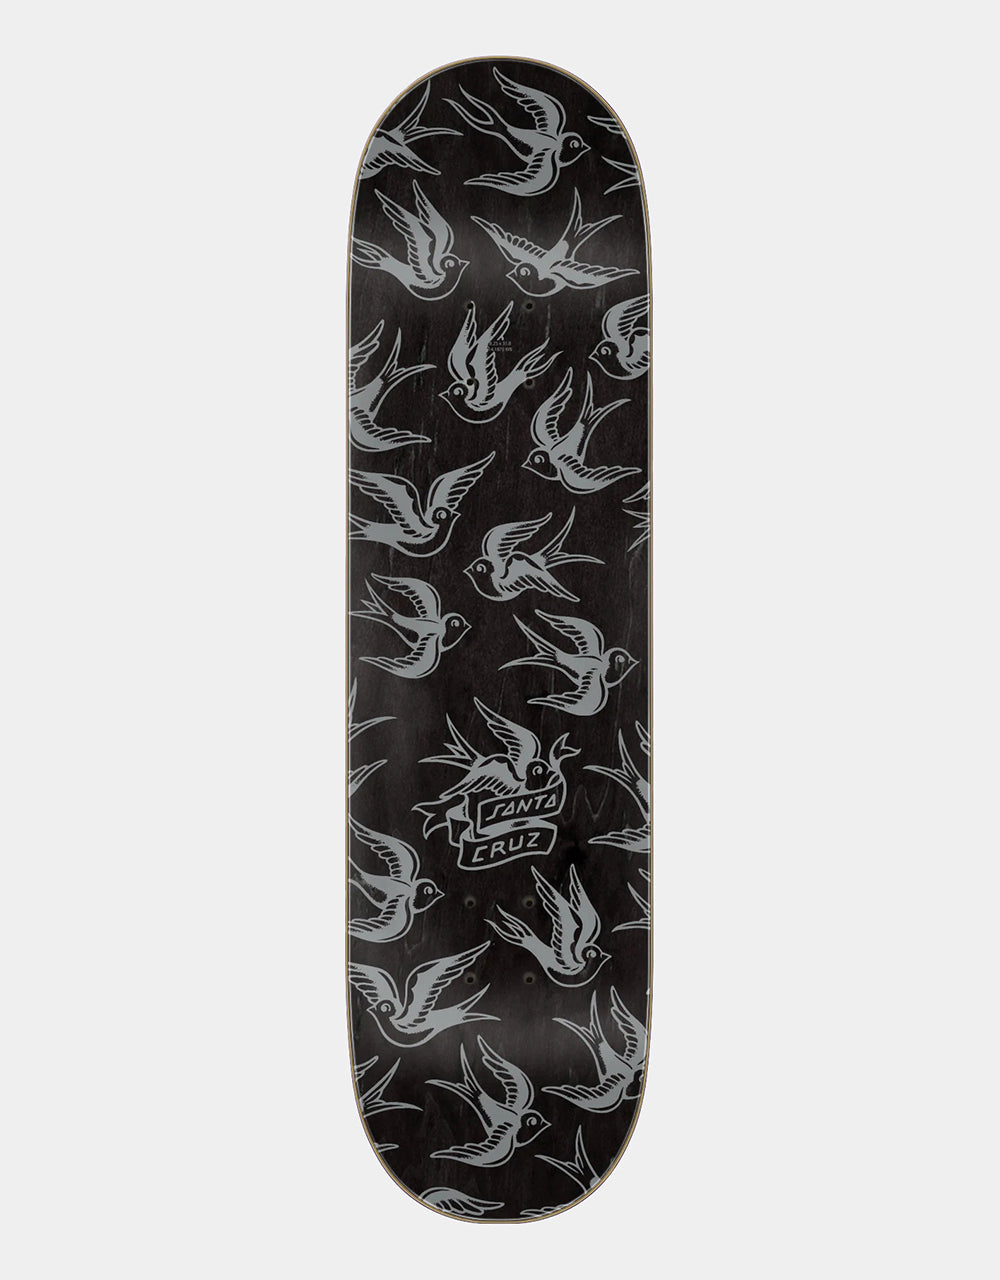 Santa Cruz Sommer Sparrows Skateboard Deck - 8.25"